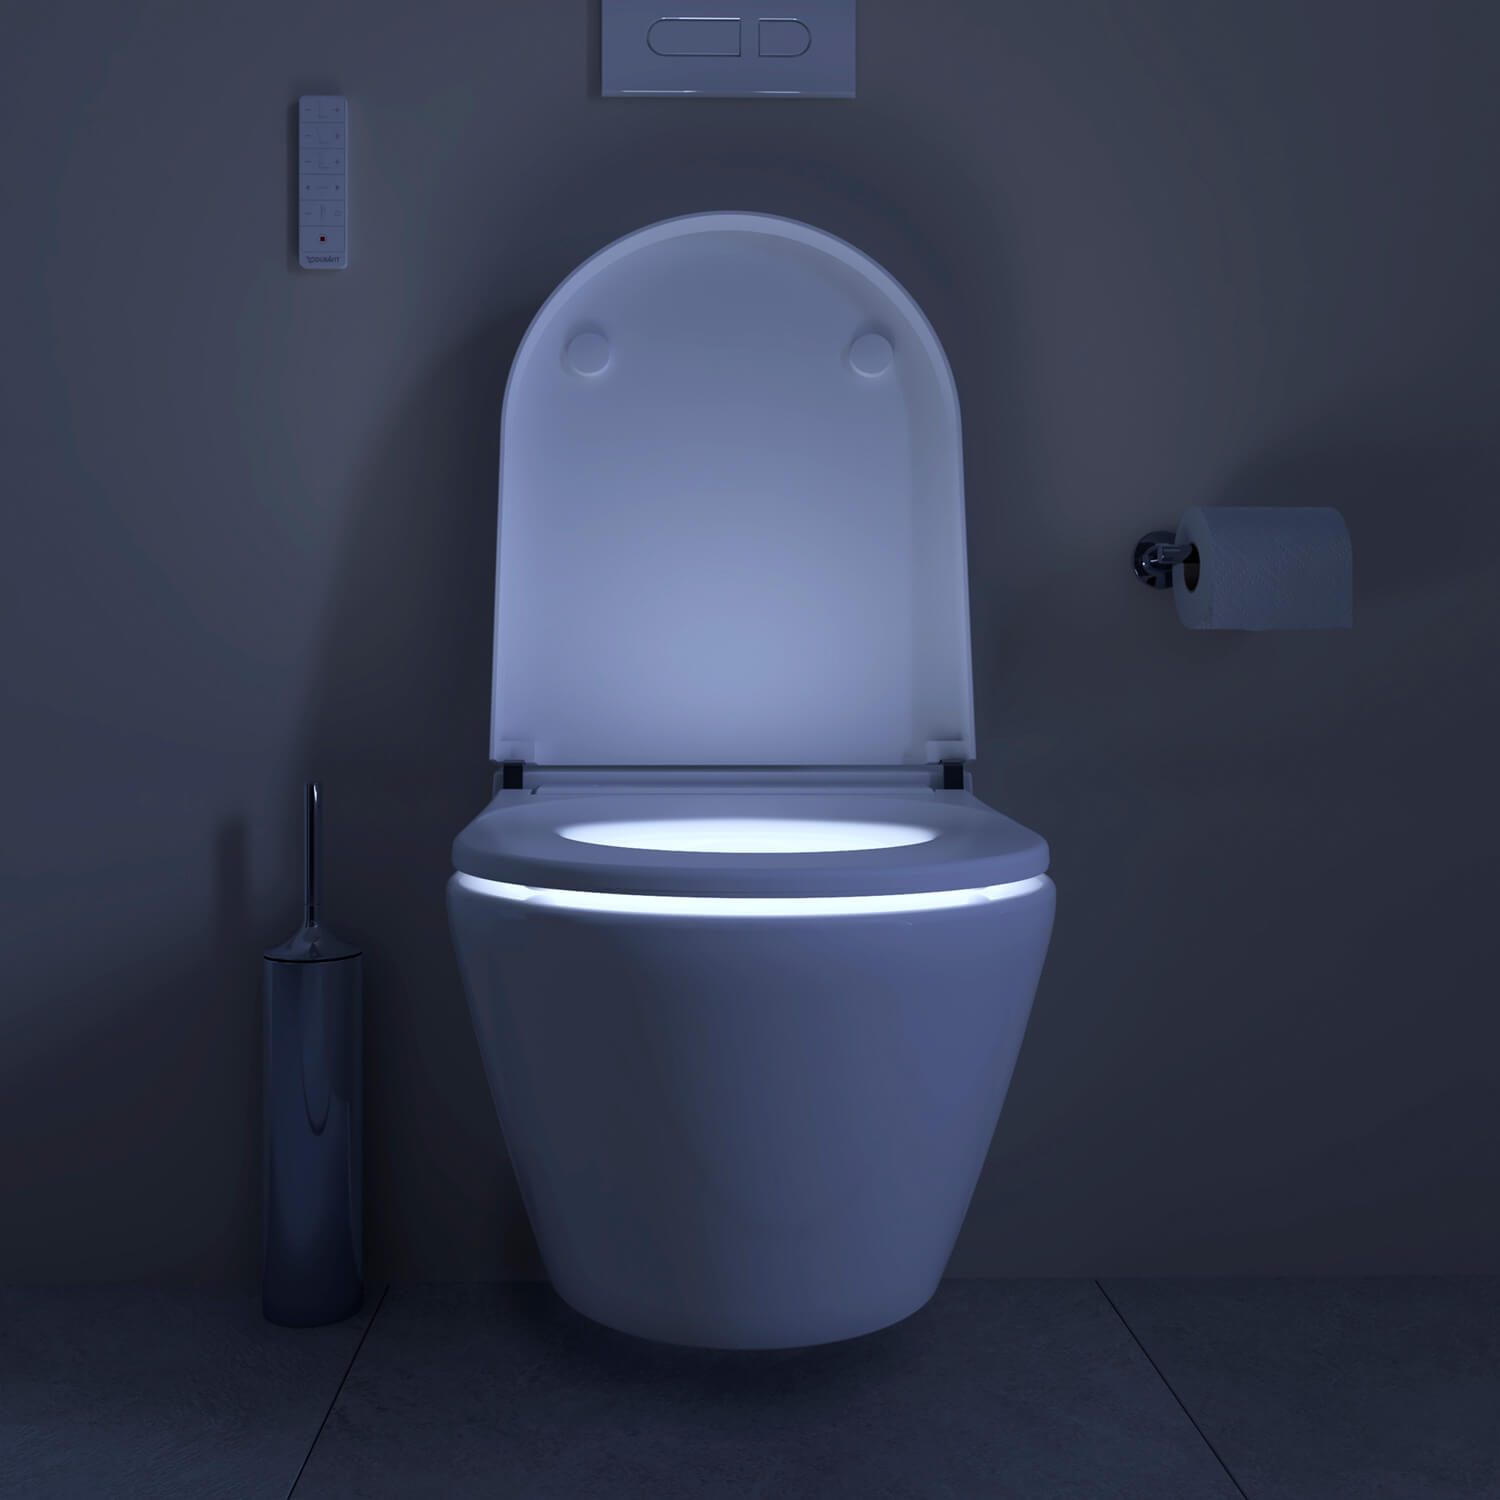 Toilet with Nightlight
